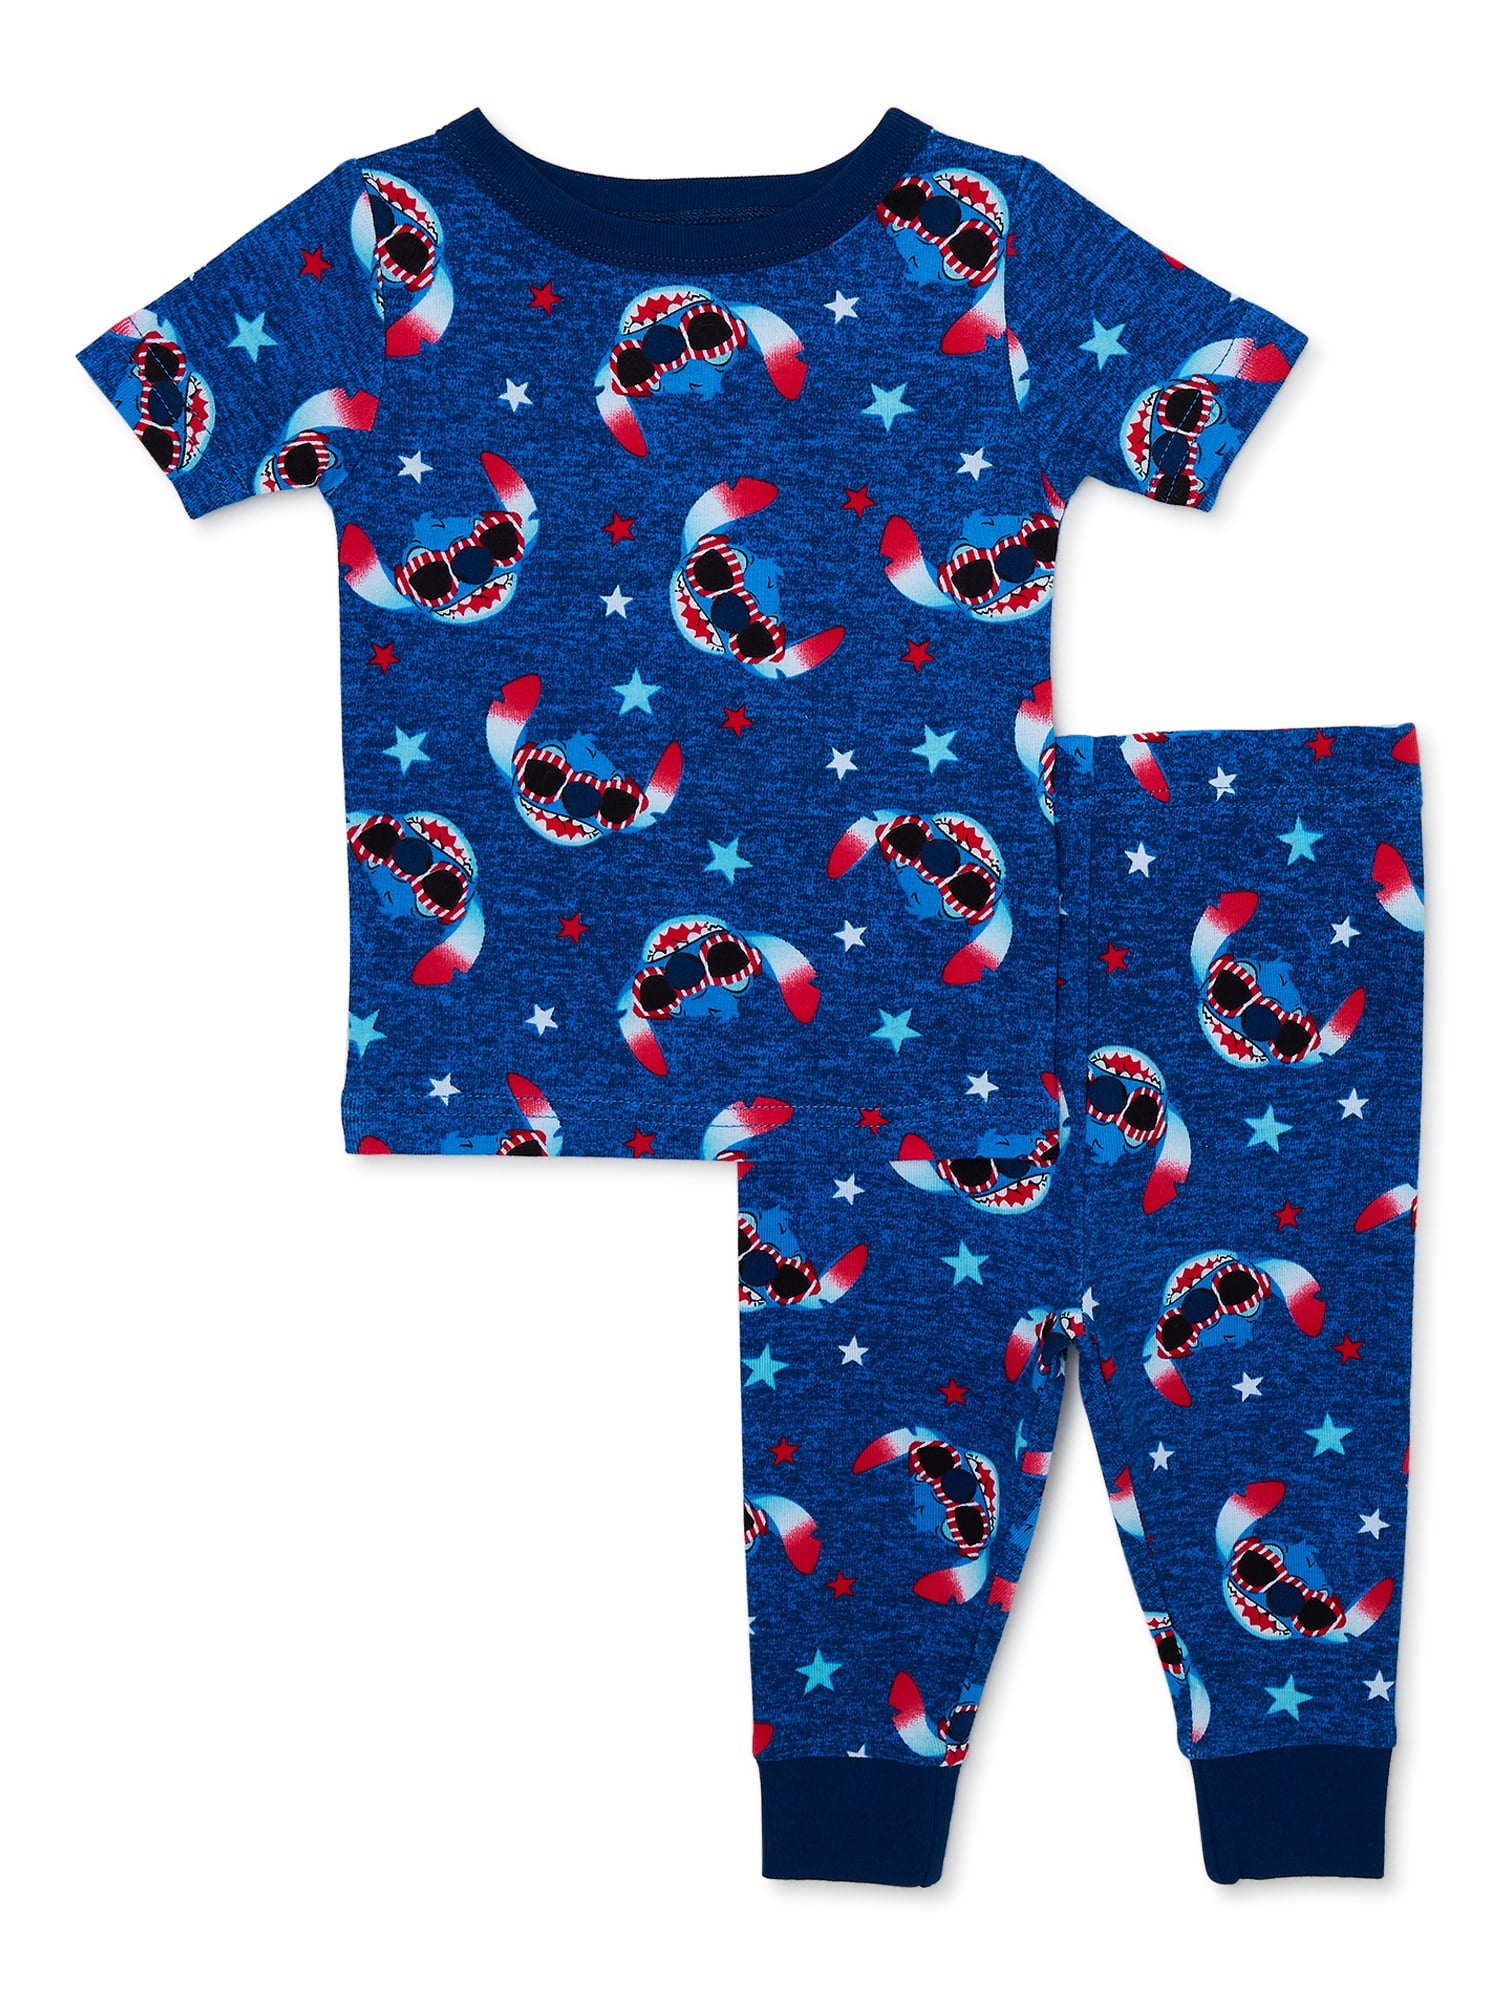 Stitch Pajama Set for Boys